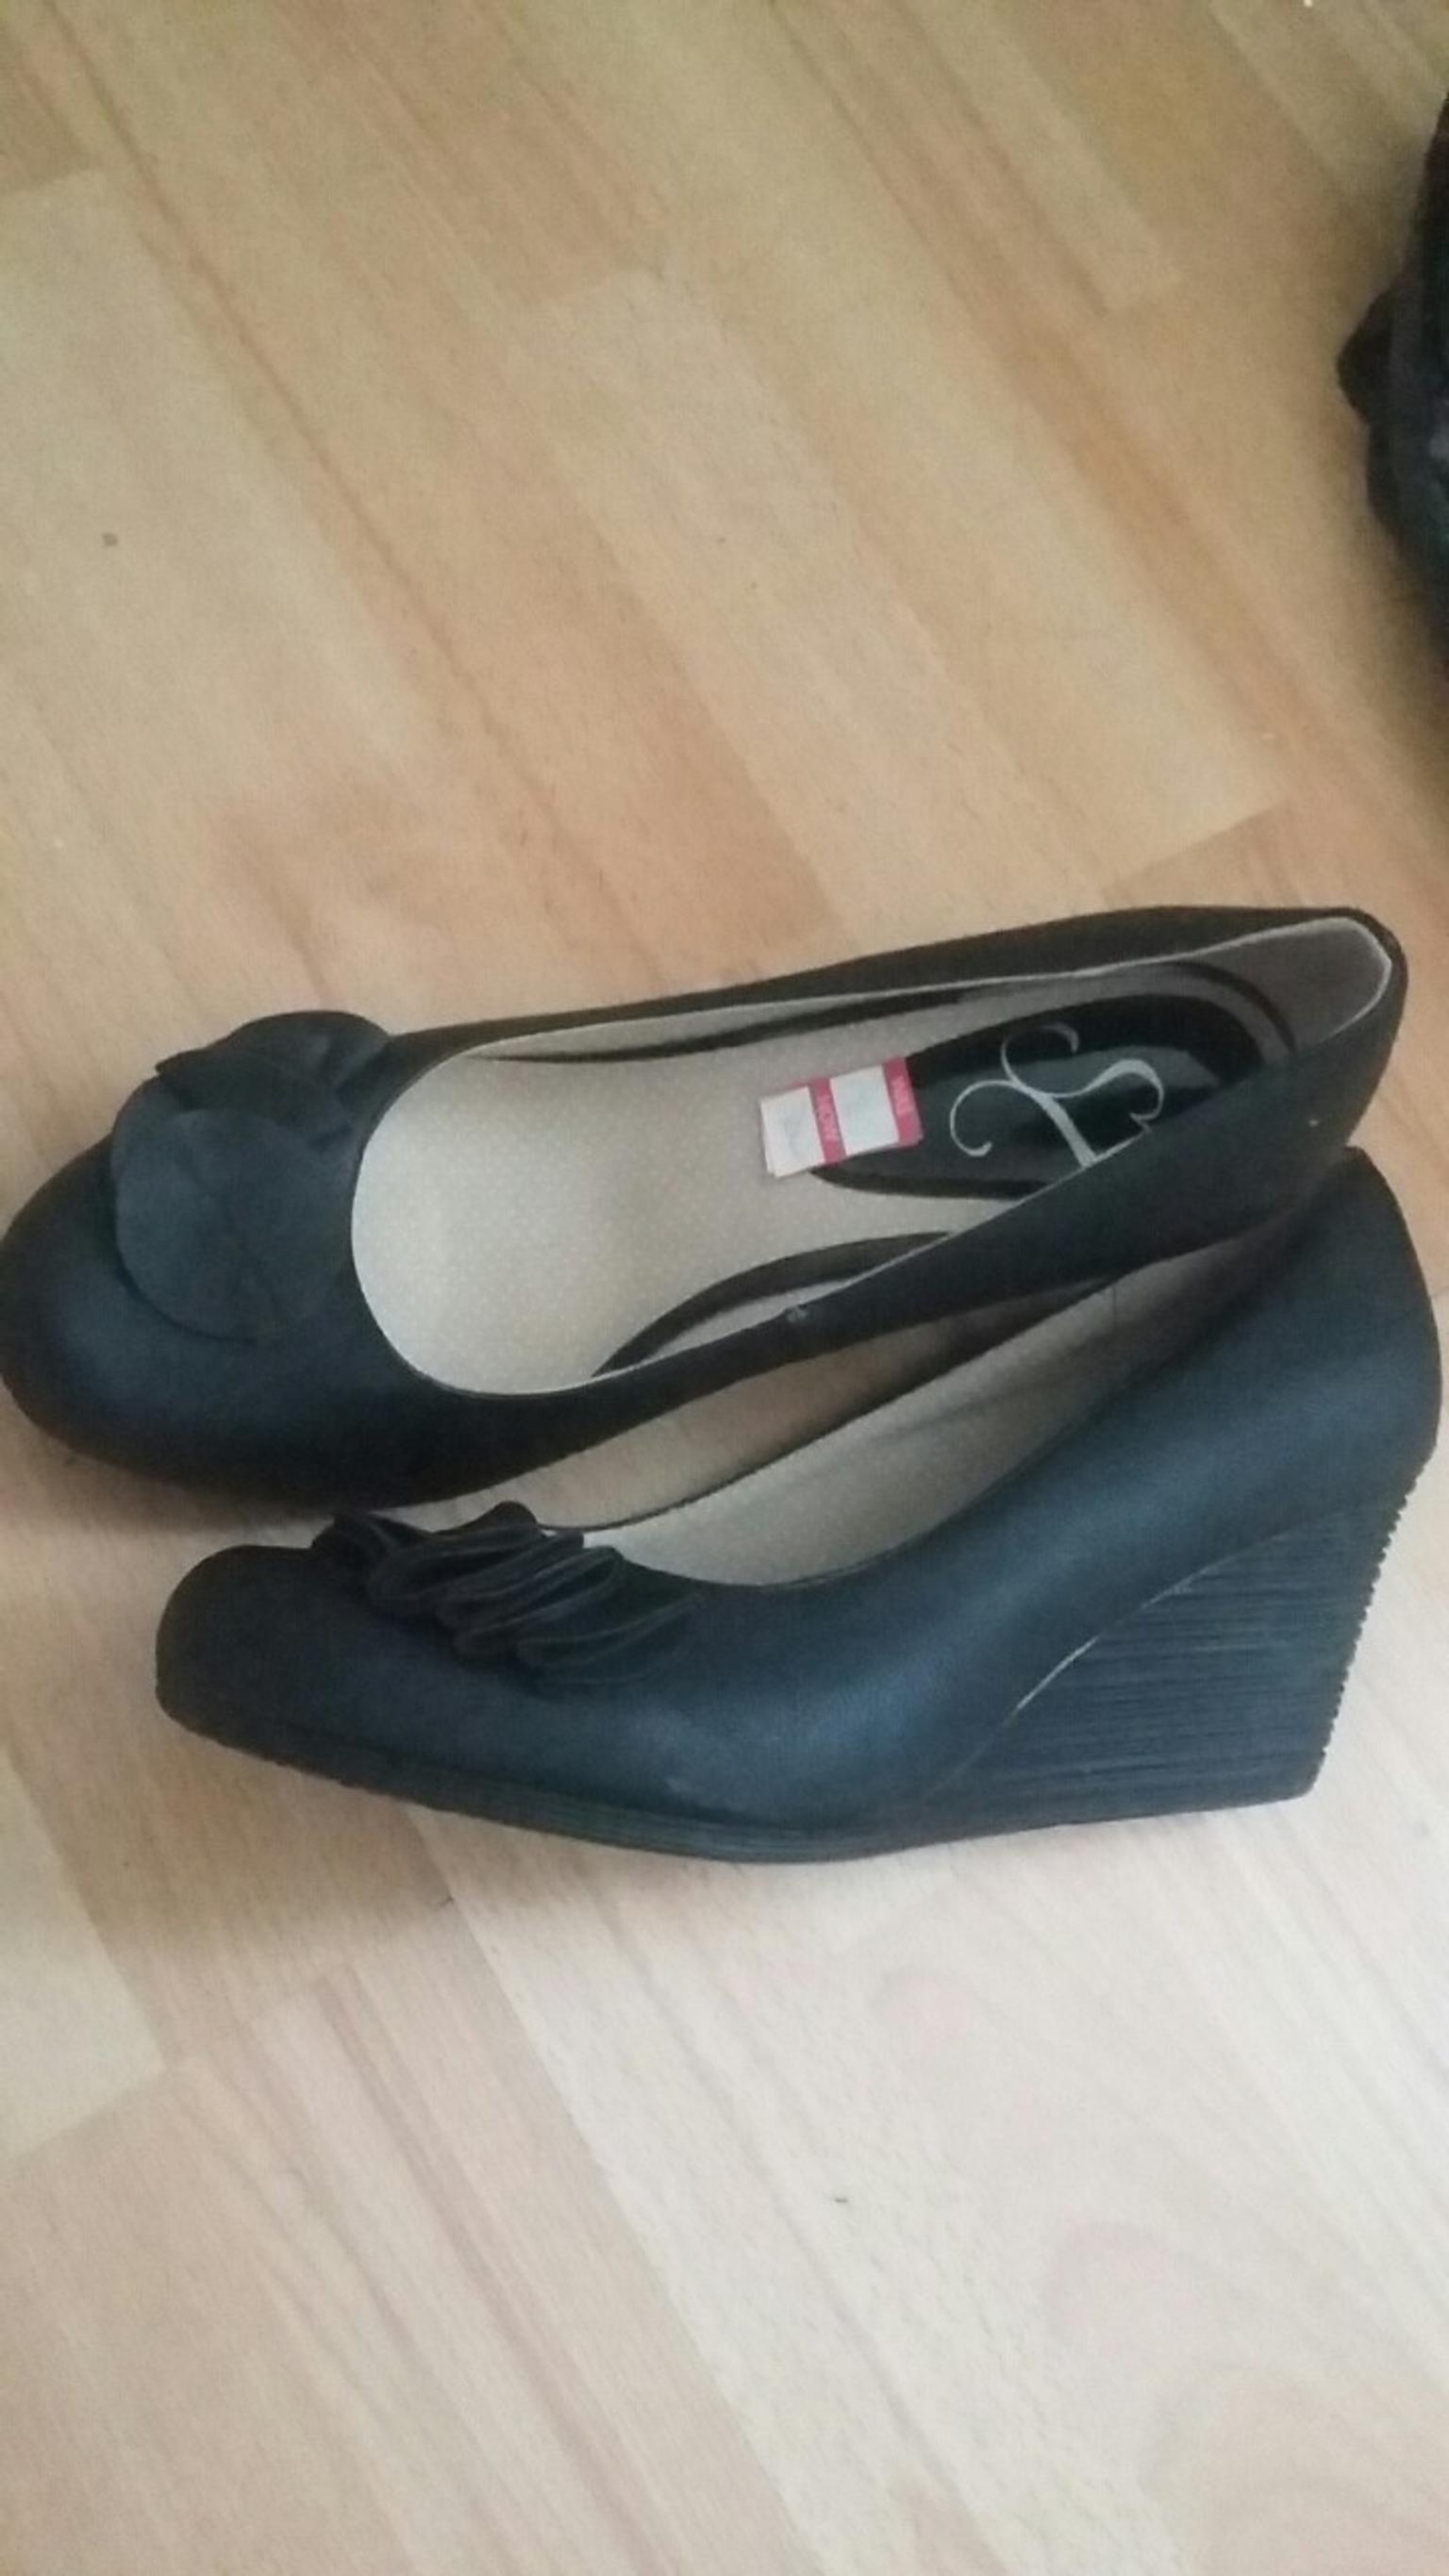 size 9 eee ladies shoes